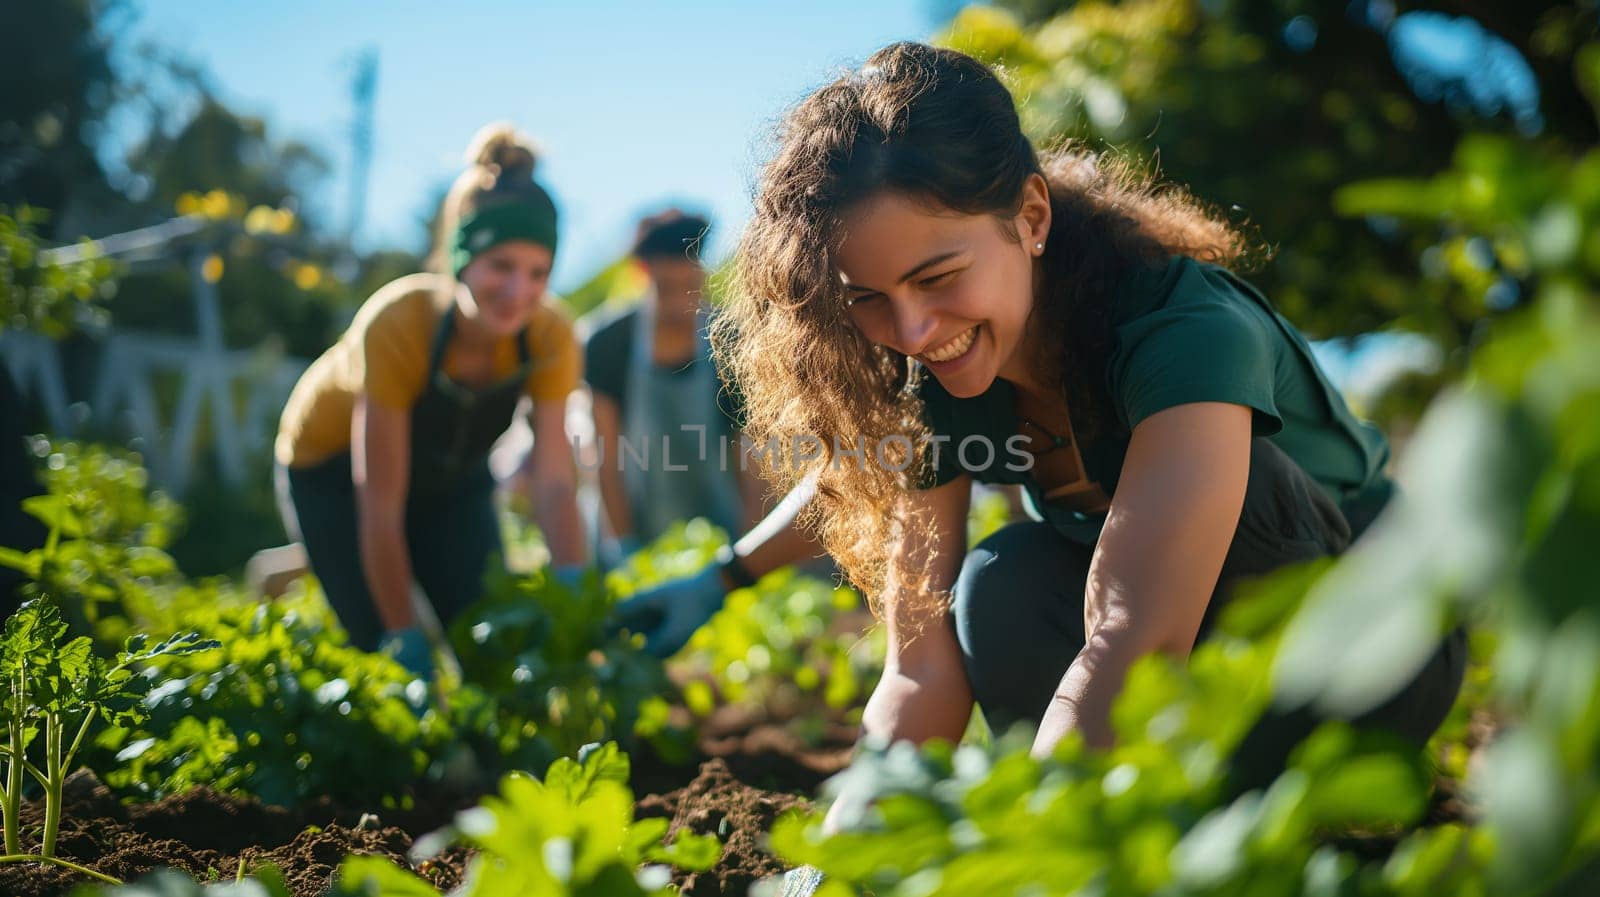 Community Garden Volunteers Tending Plants on a Sunny Day by chrisroll